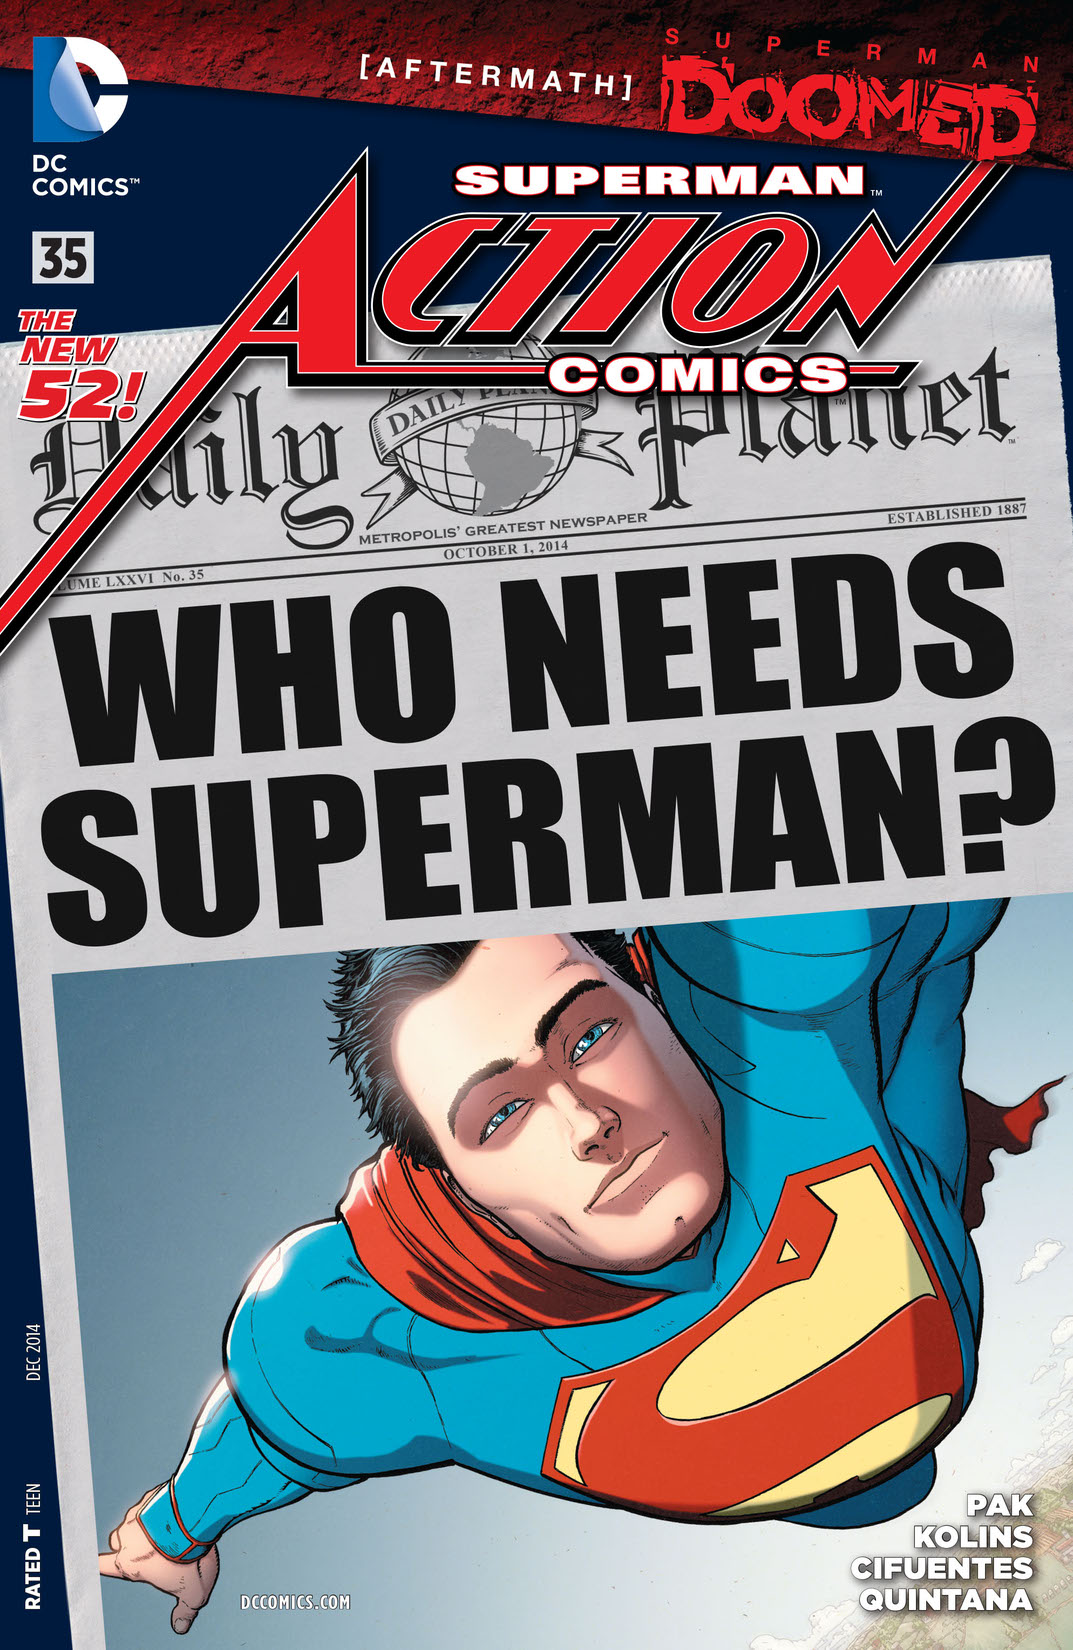 Action Comics (2011-) #35 preview images